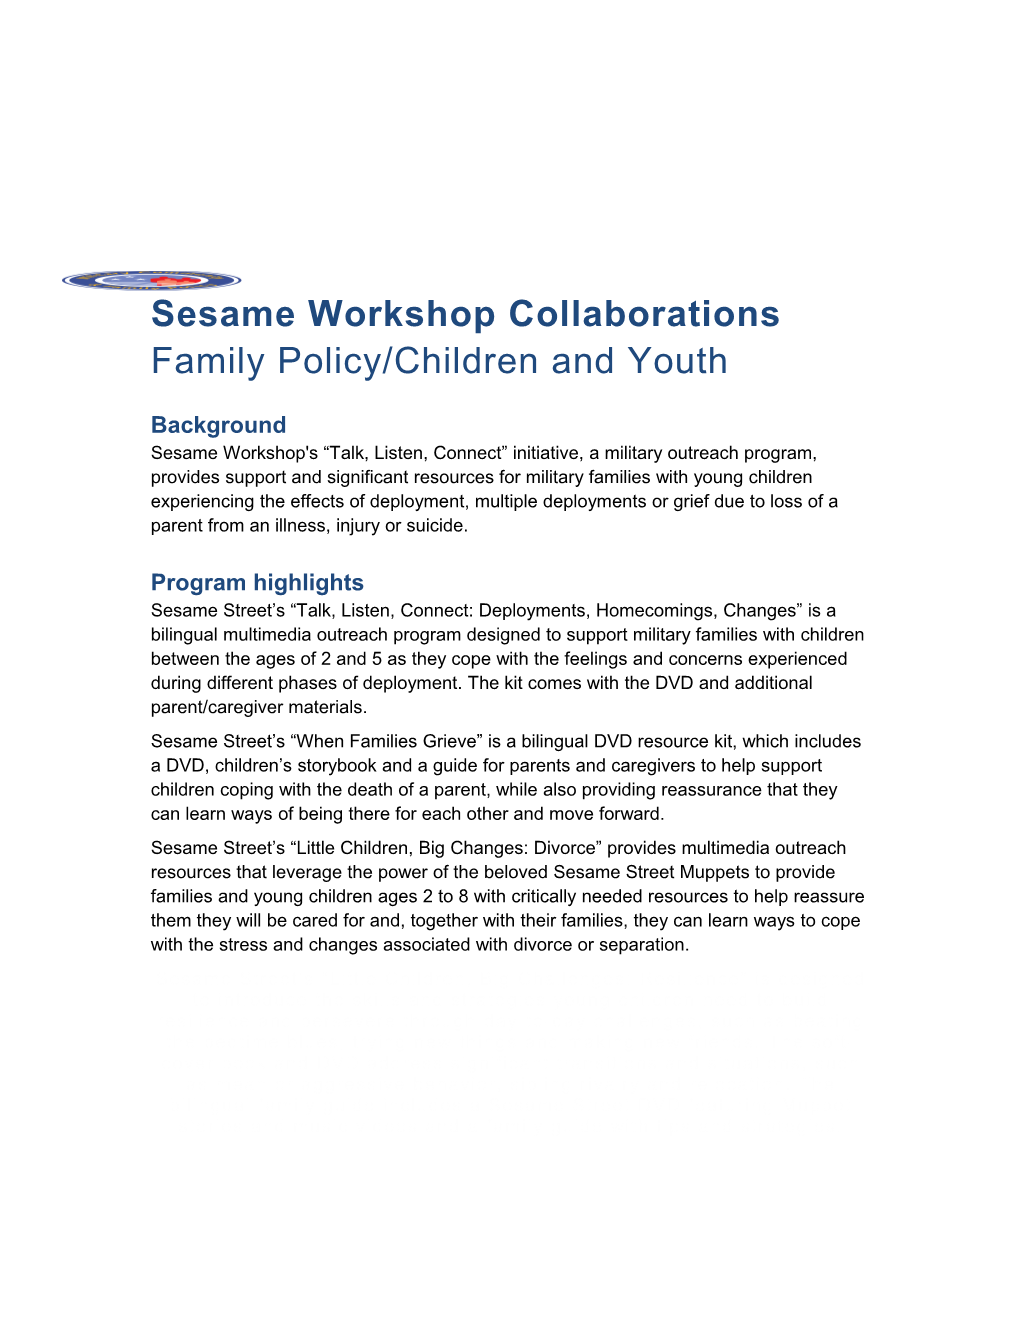 Sesame Workshop Partnership Info Paper